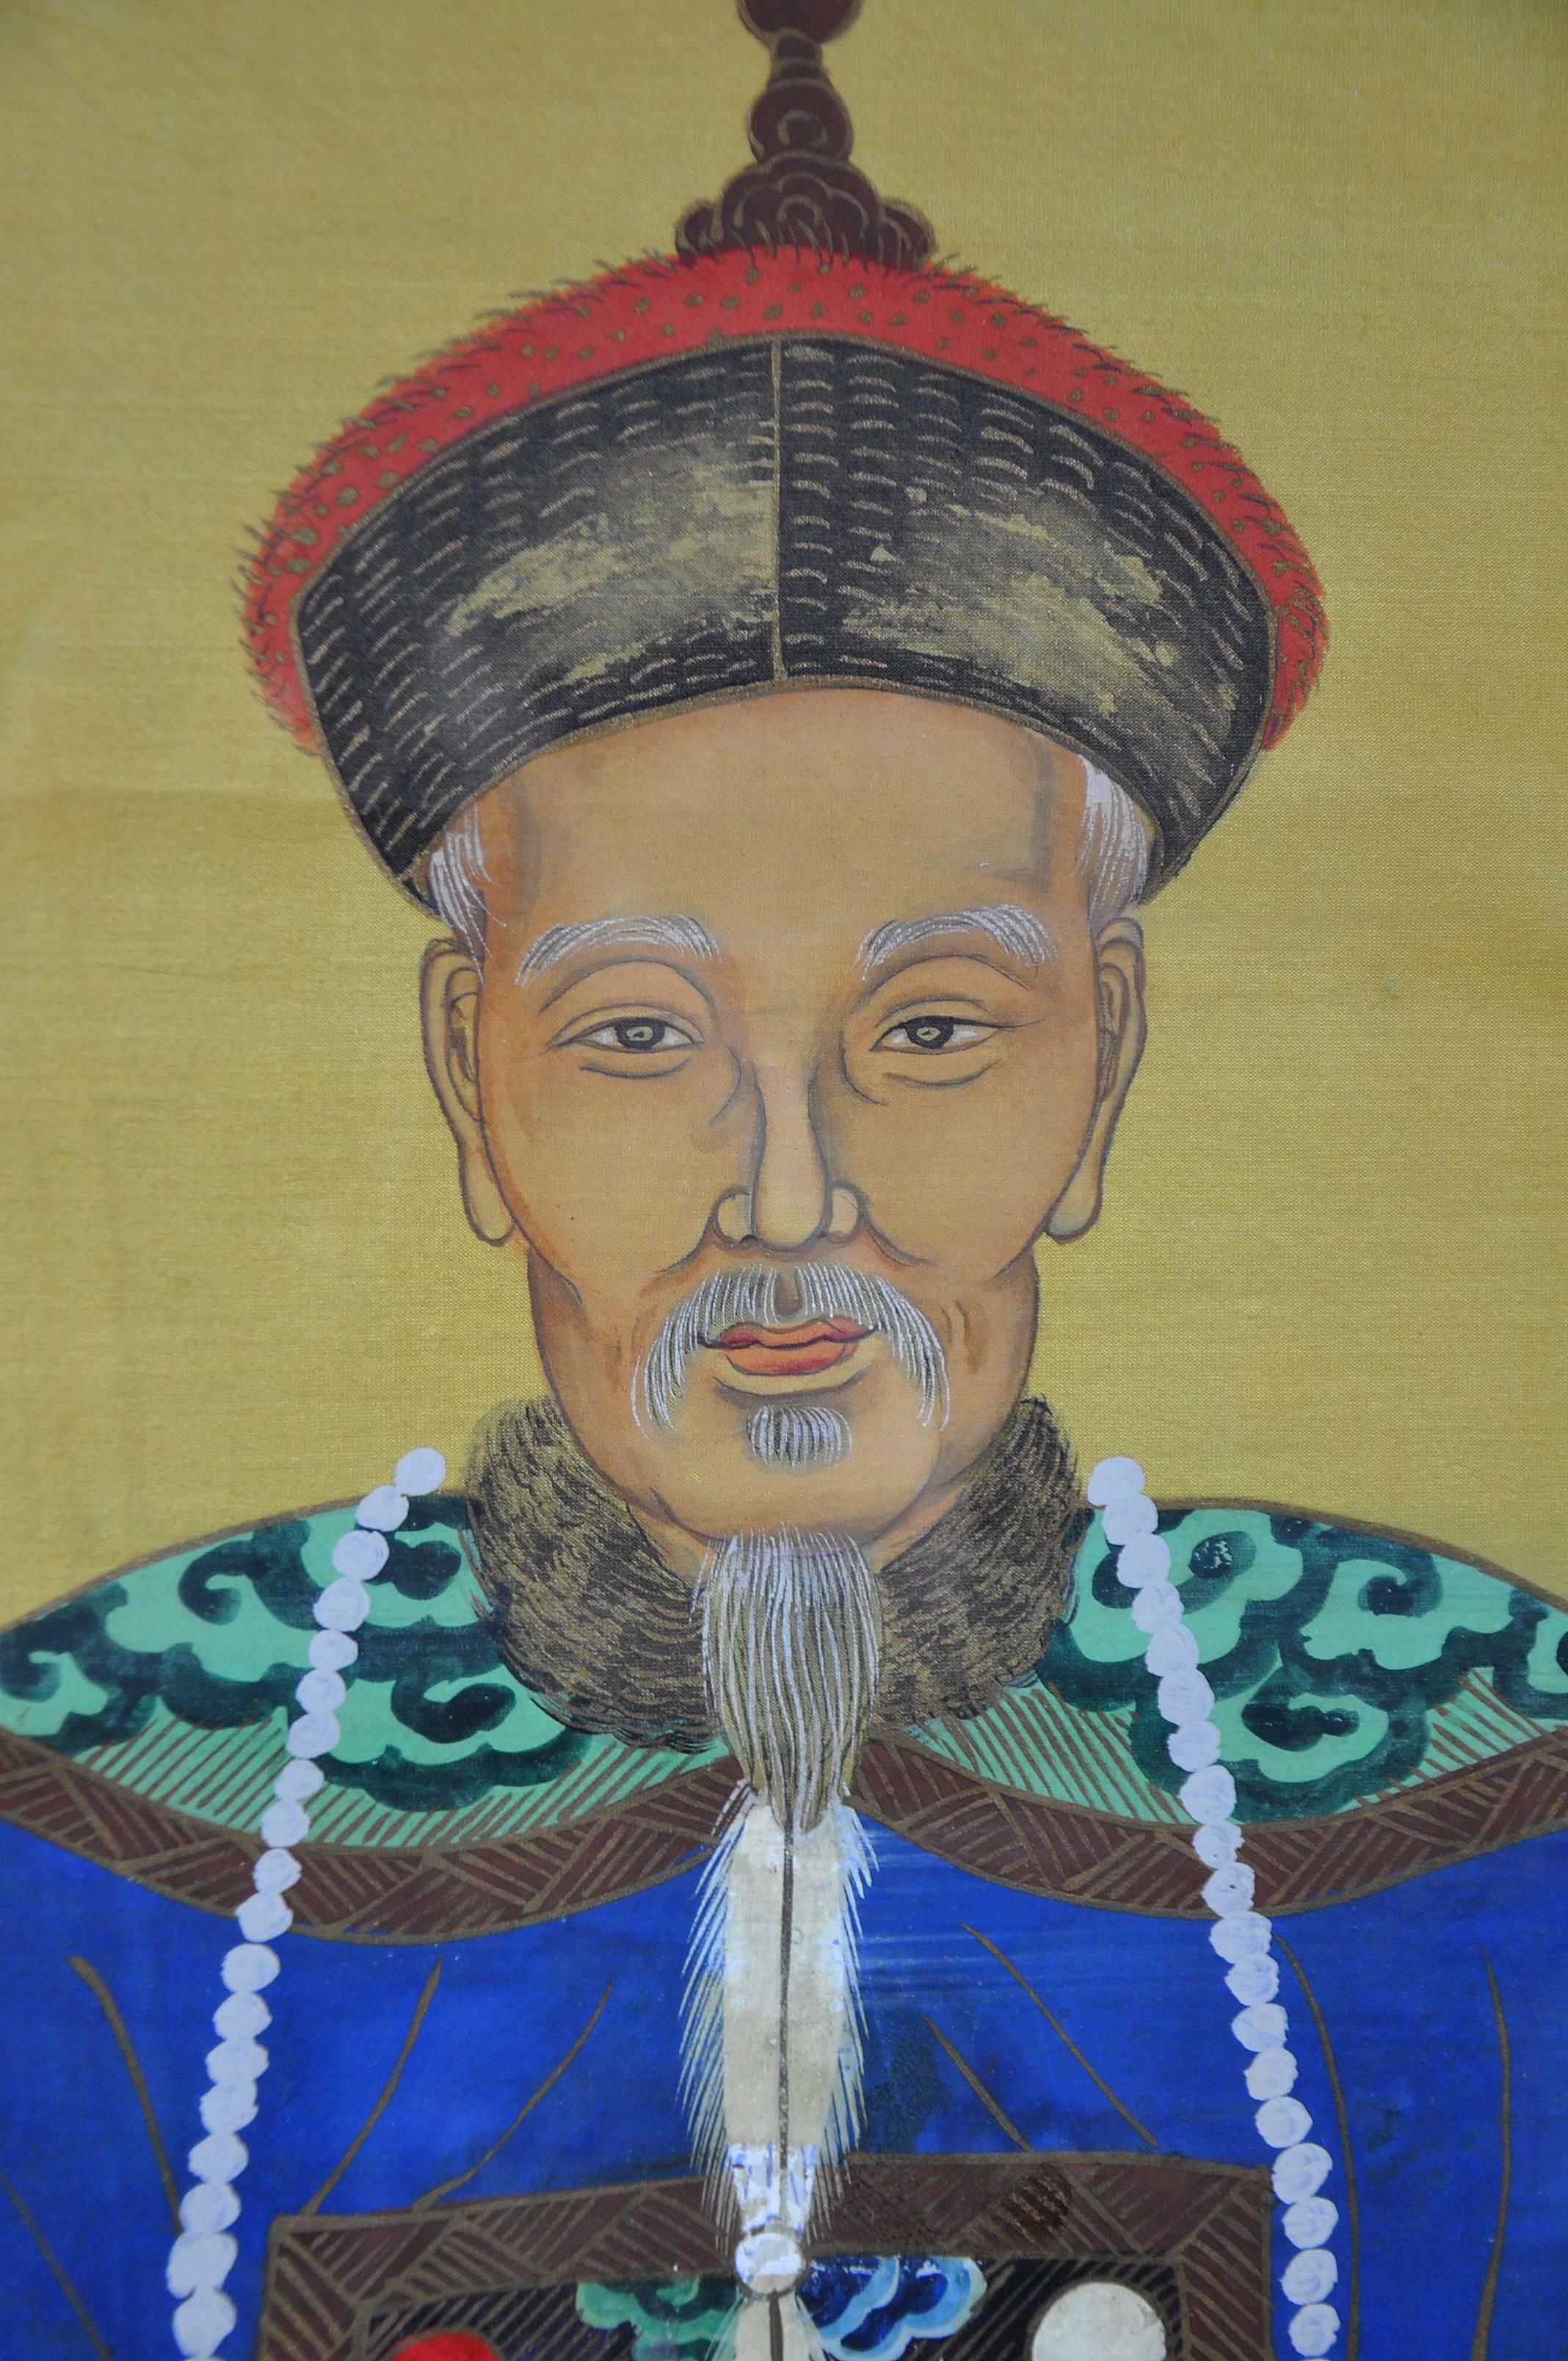 Chinese Export China Trade Ancestor Portraits